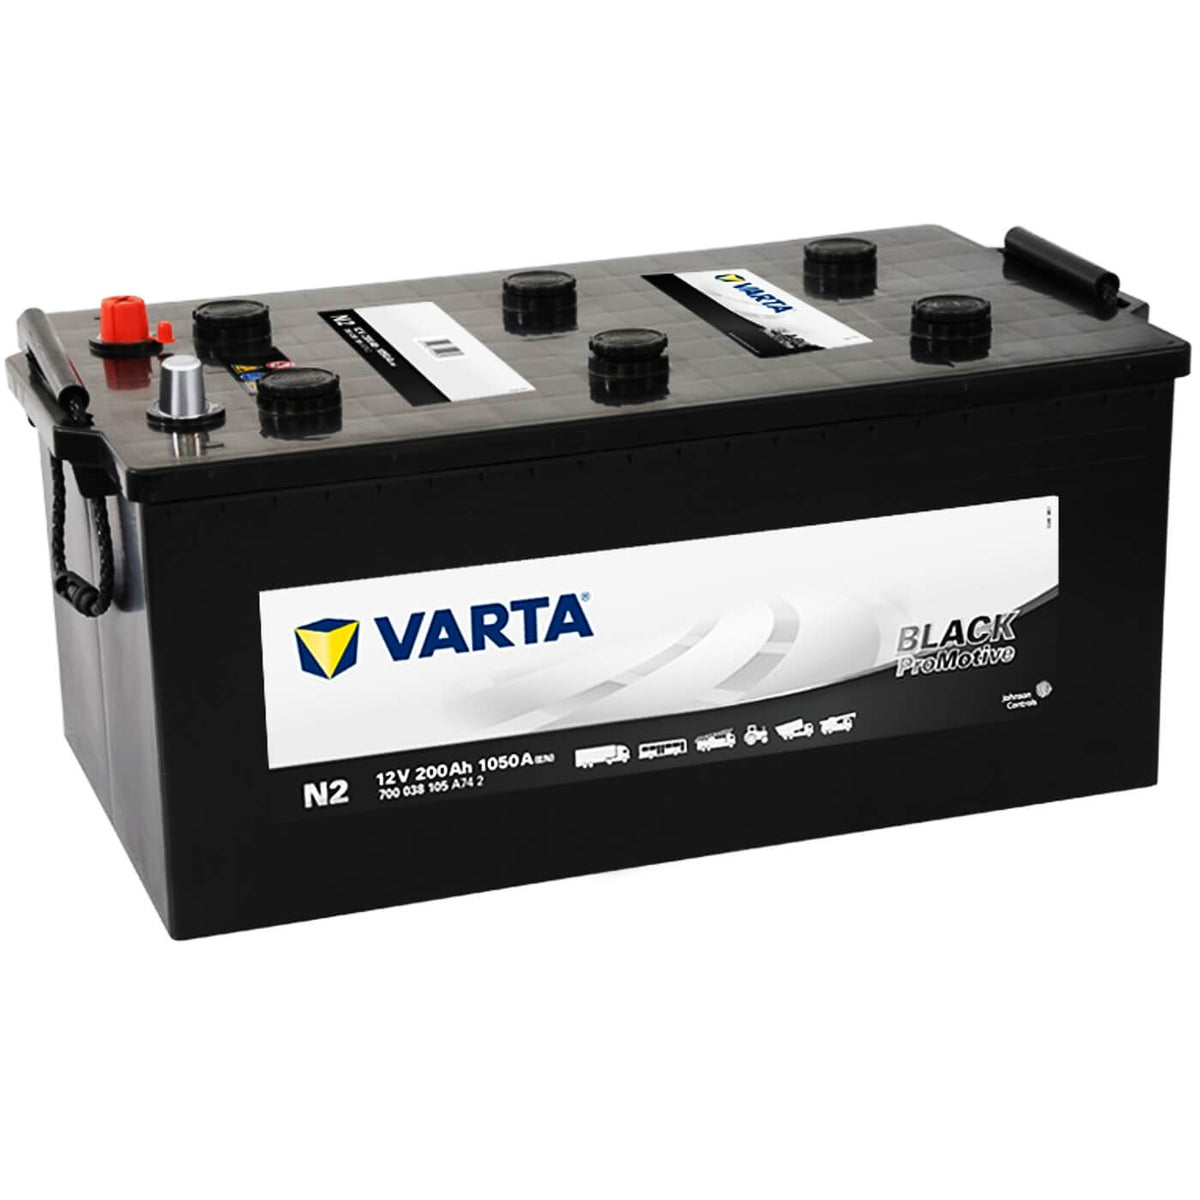 Varta N2 Promotive Black 12V 200Ah 1050A/EN